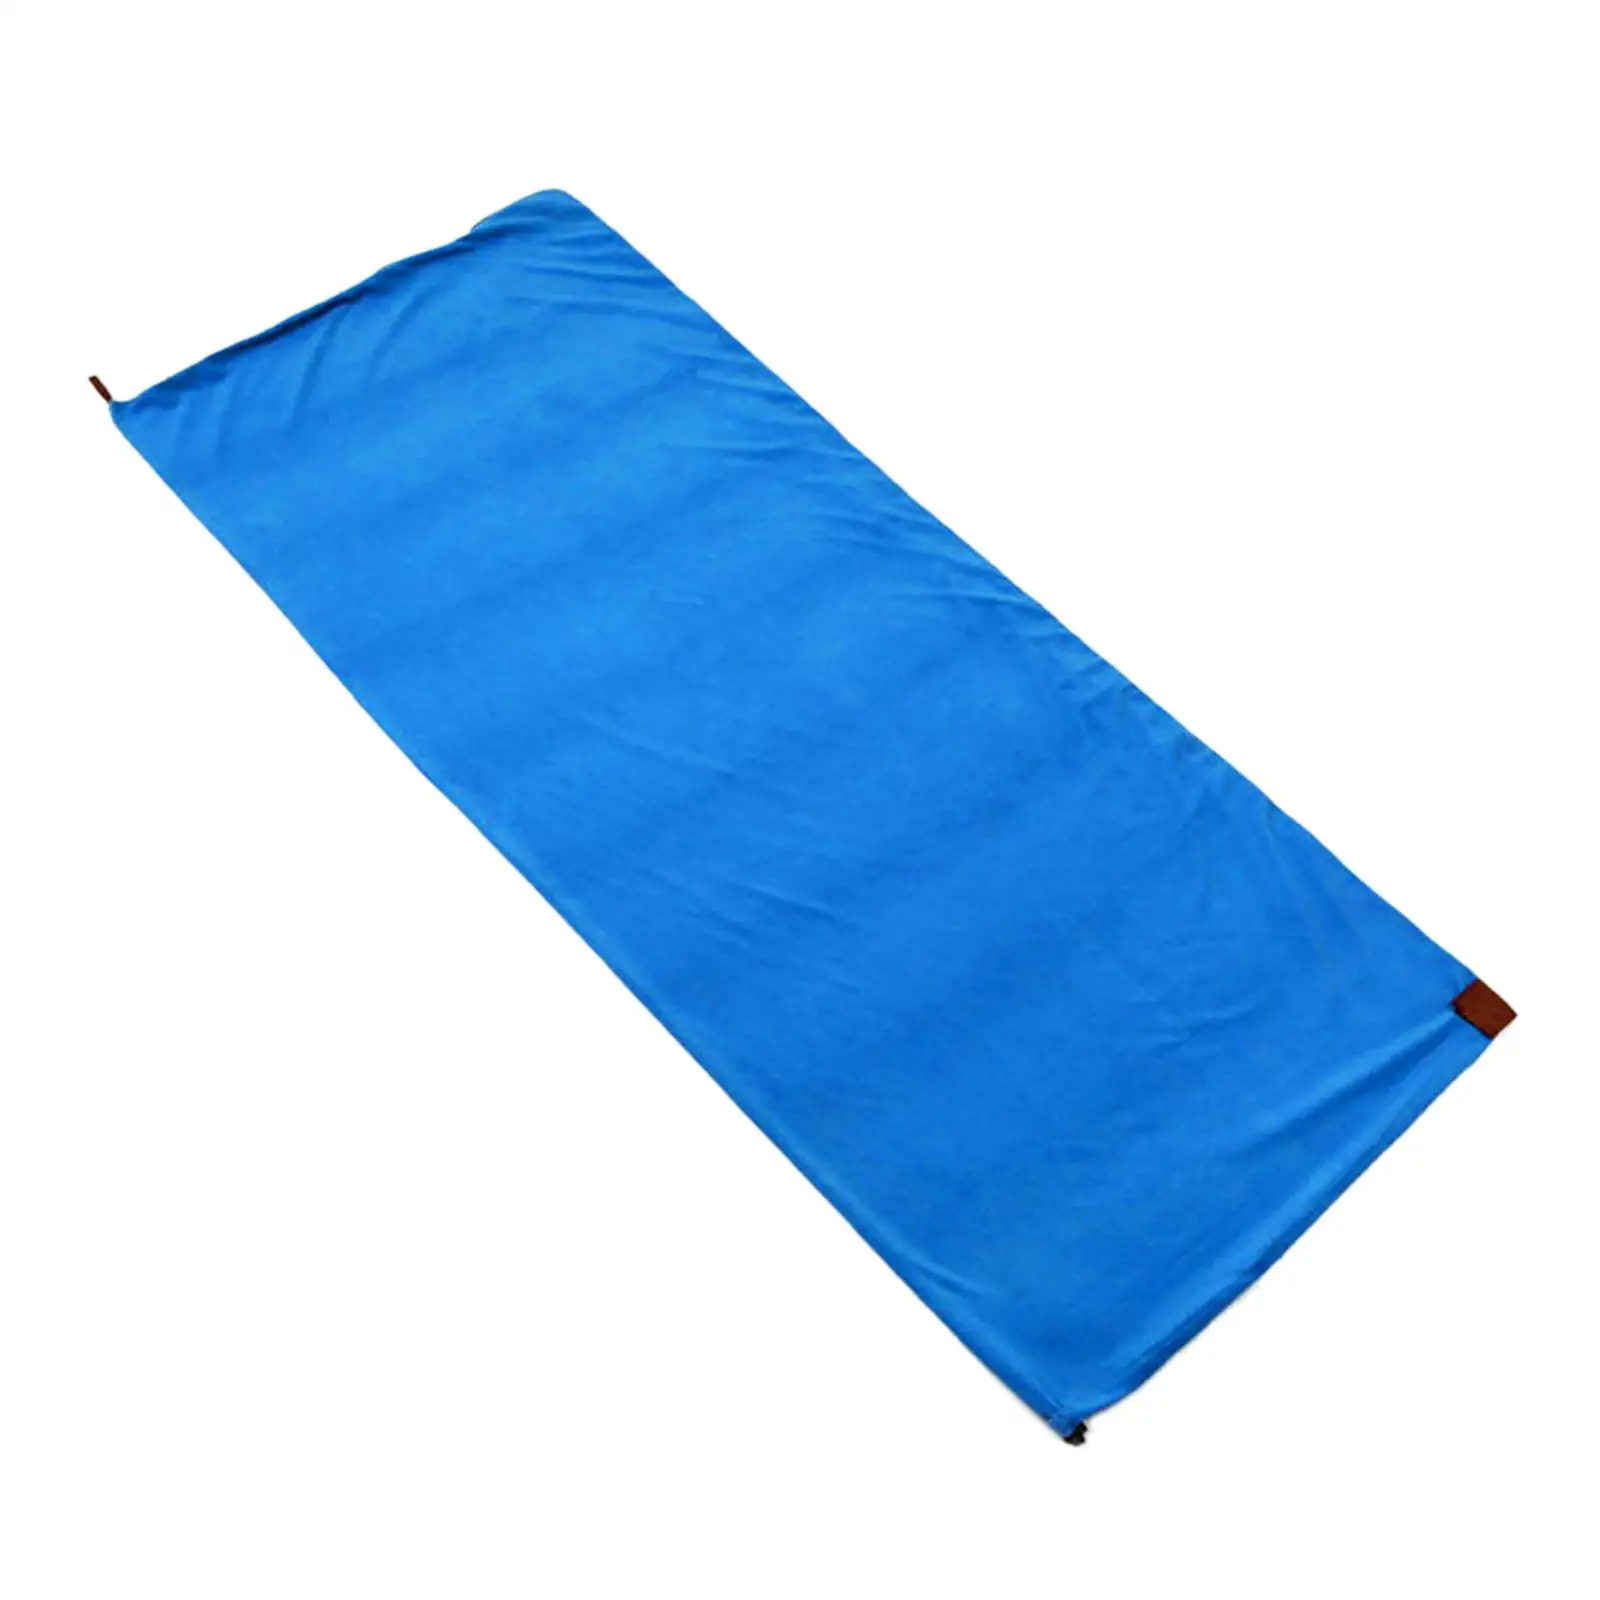 Lightweight camping blanket, warm outer pillow, sleeping bag inner liner for